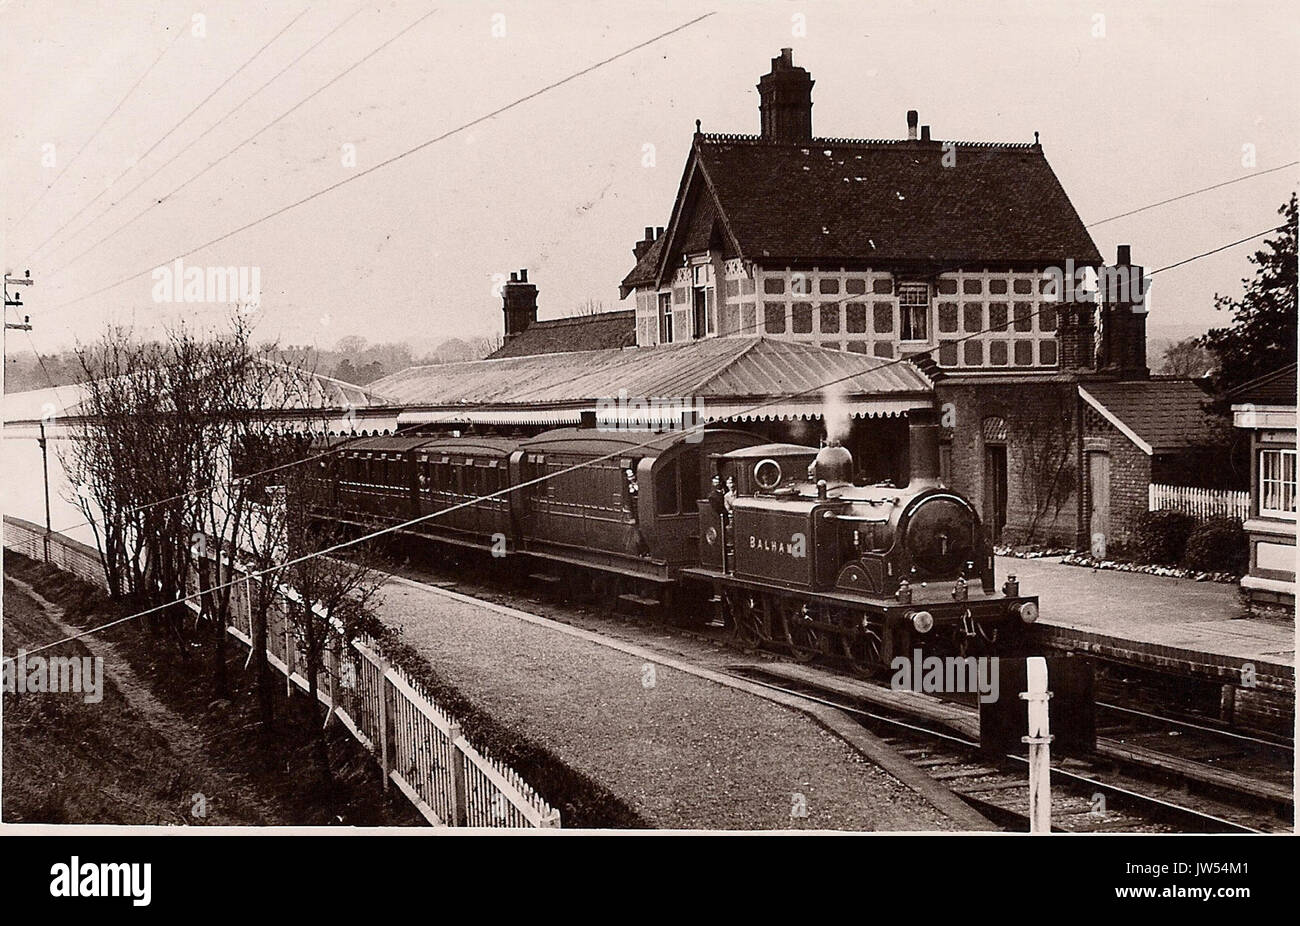 Midhurst (LBSCR) railway station (postcard) Stock Photo